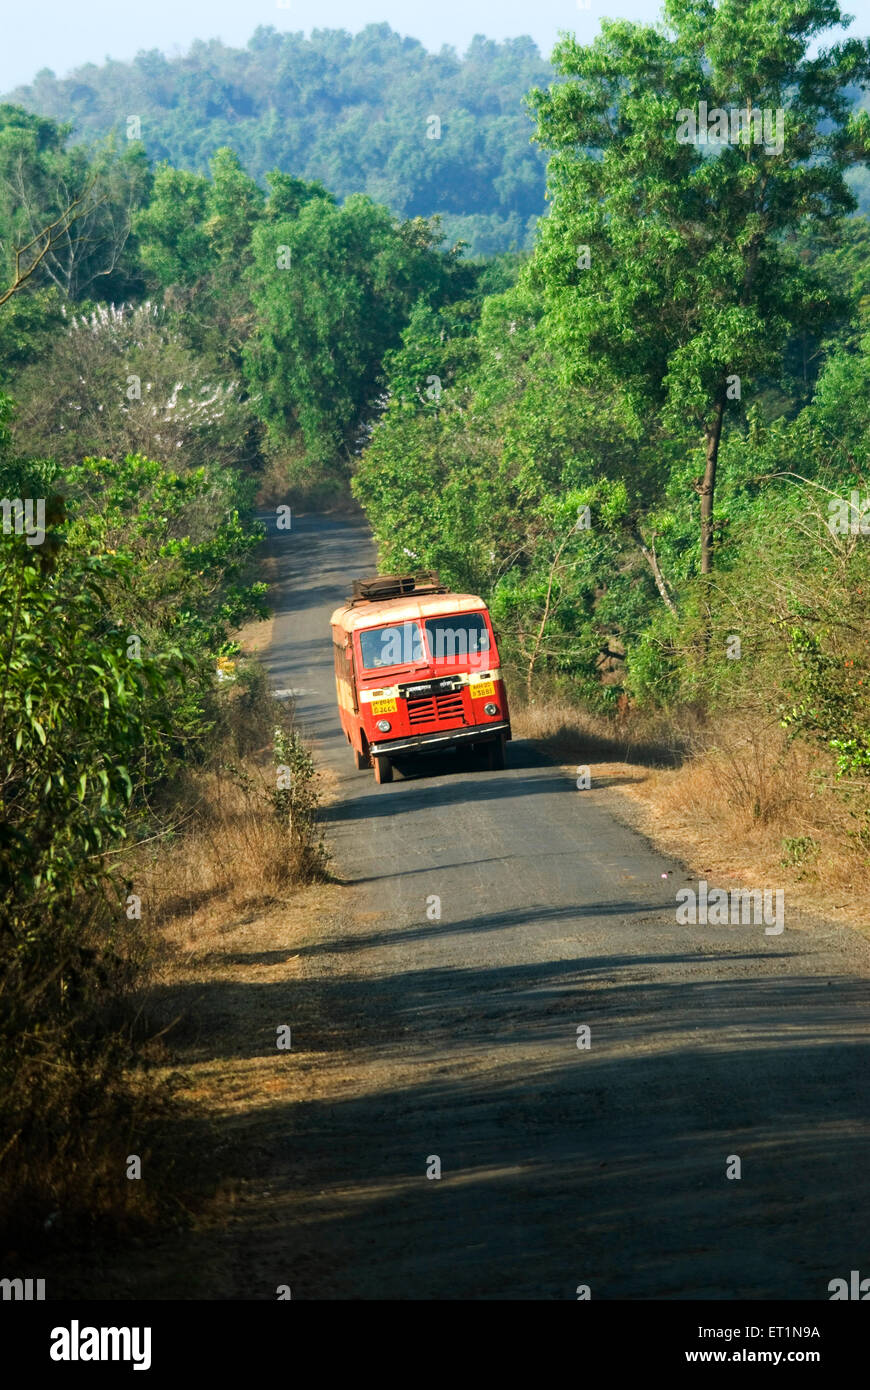 state transport bus on village road ; Lanja ; district Ratnagiri ; Maharashtra ; India Stock Photo